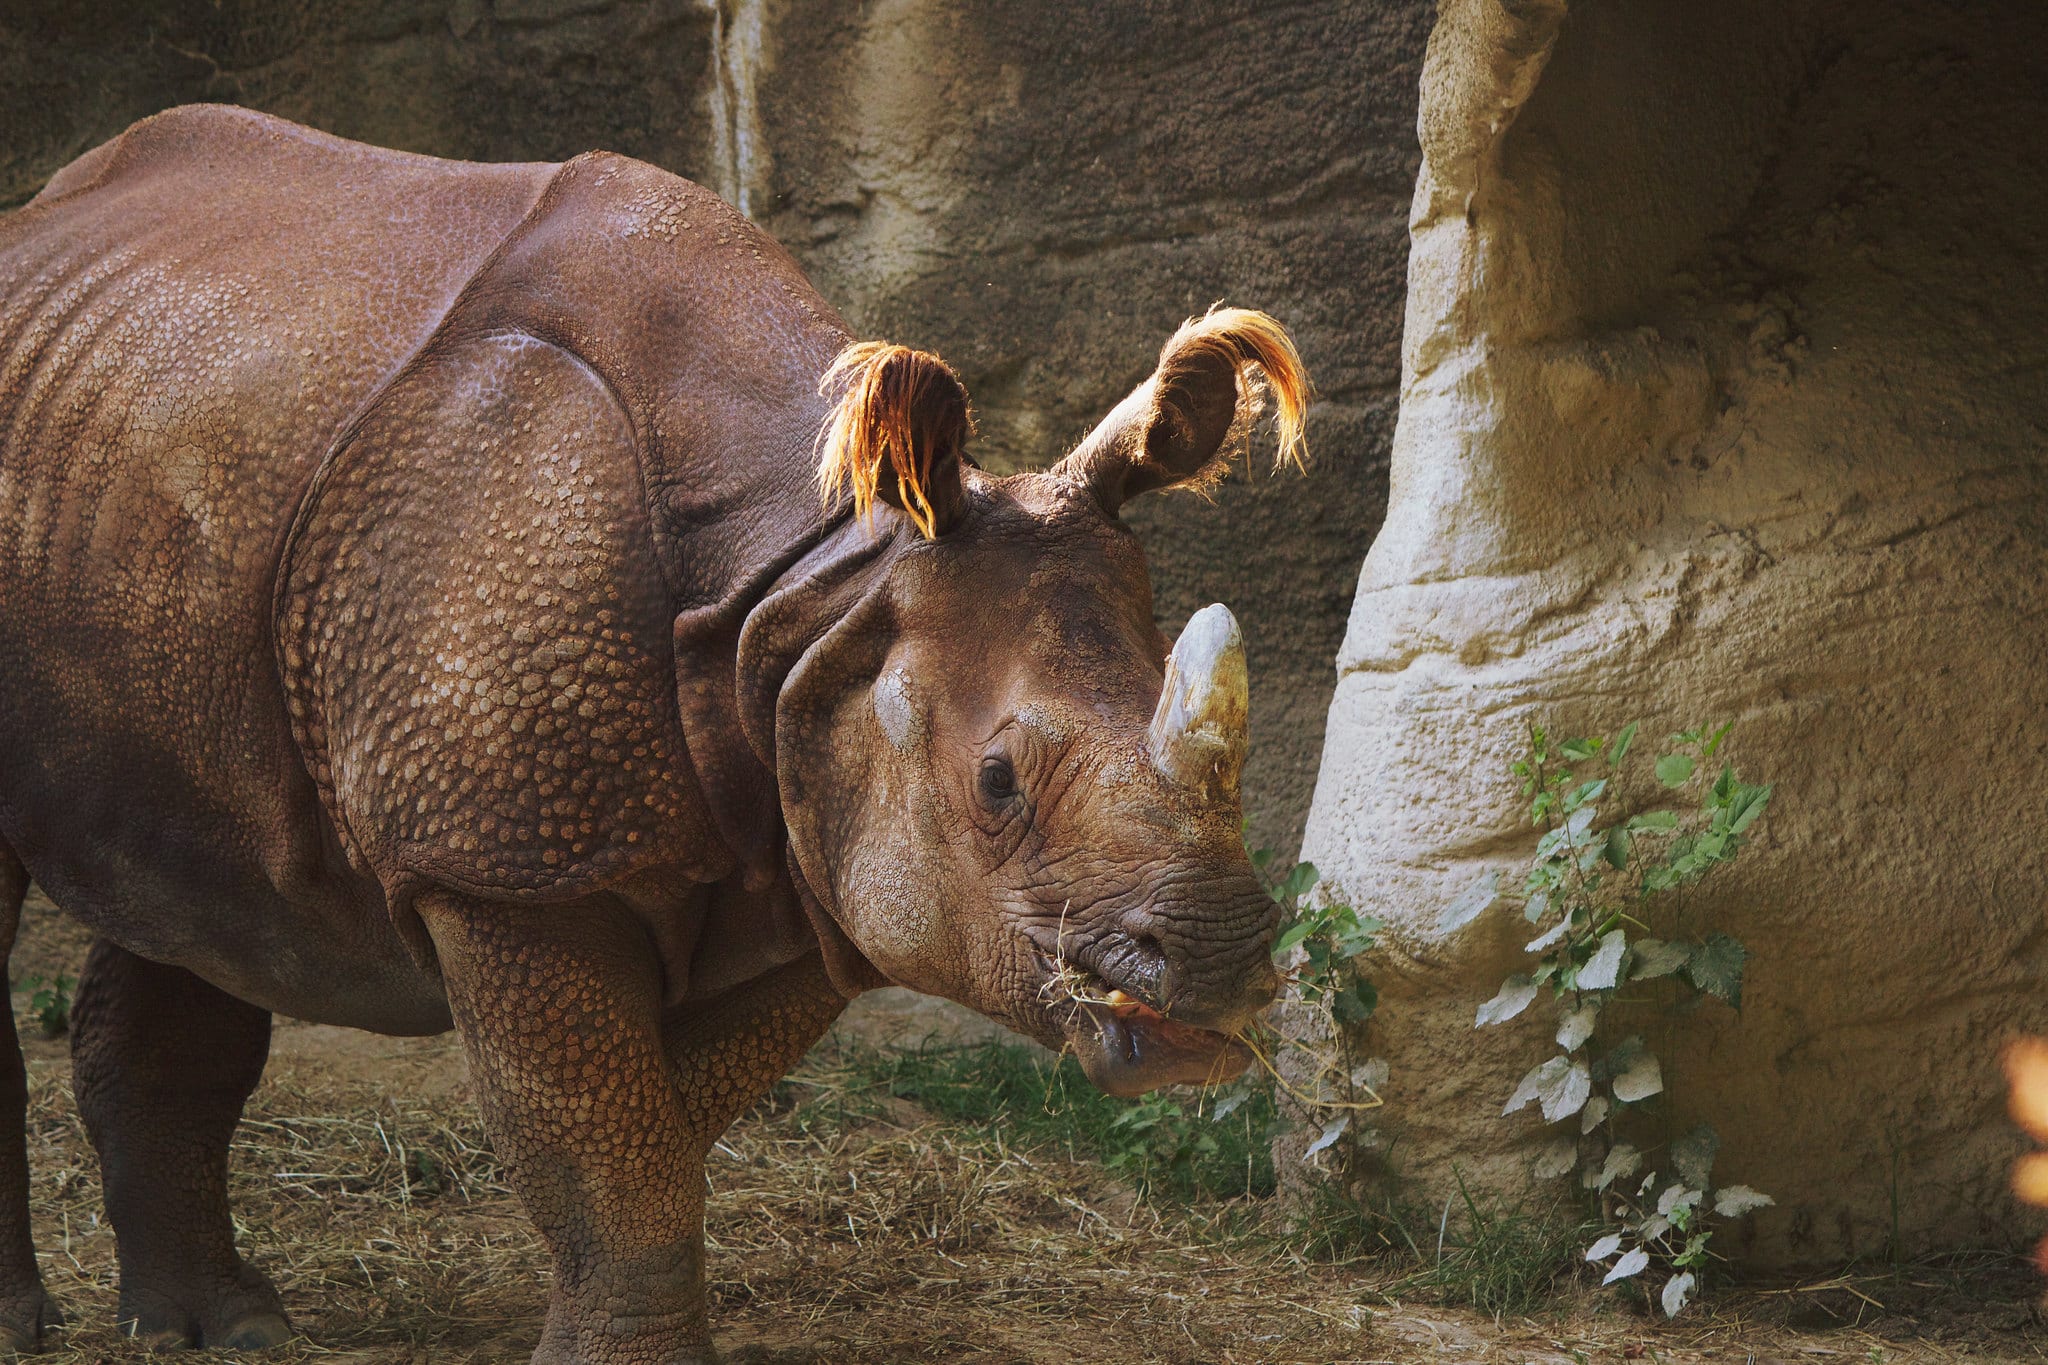 Photo credits to Flickr, “Sumatran rhino” by Kat Jenkinson used under CC BY-NC-ND 2.0